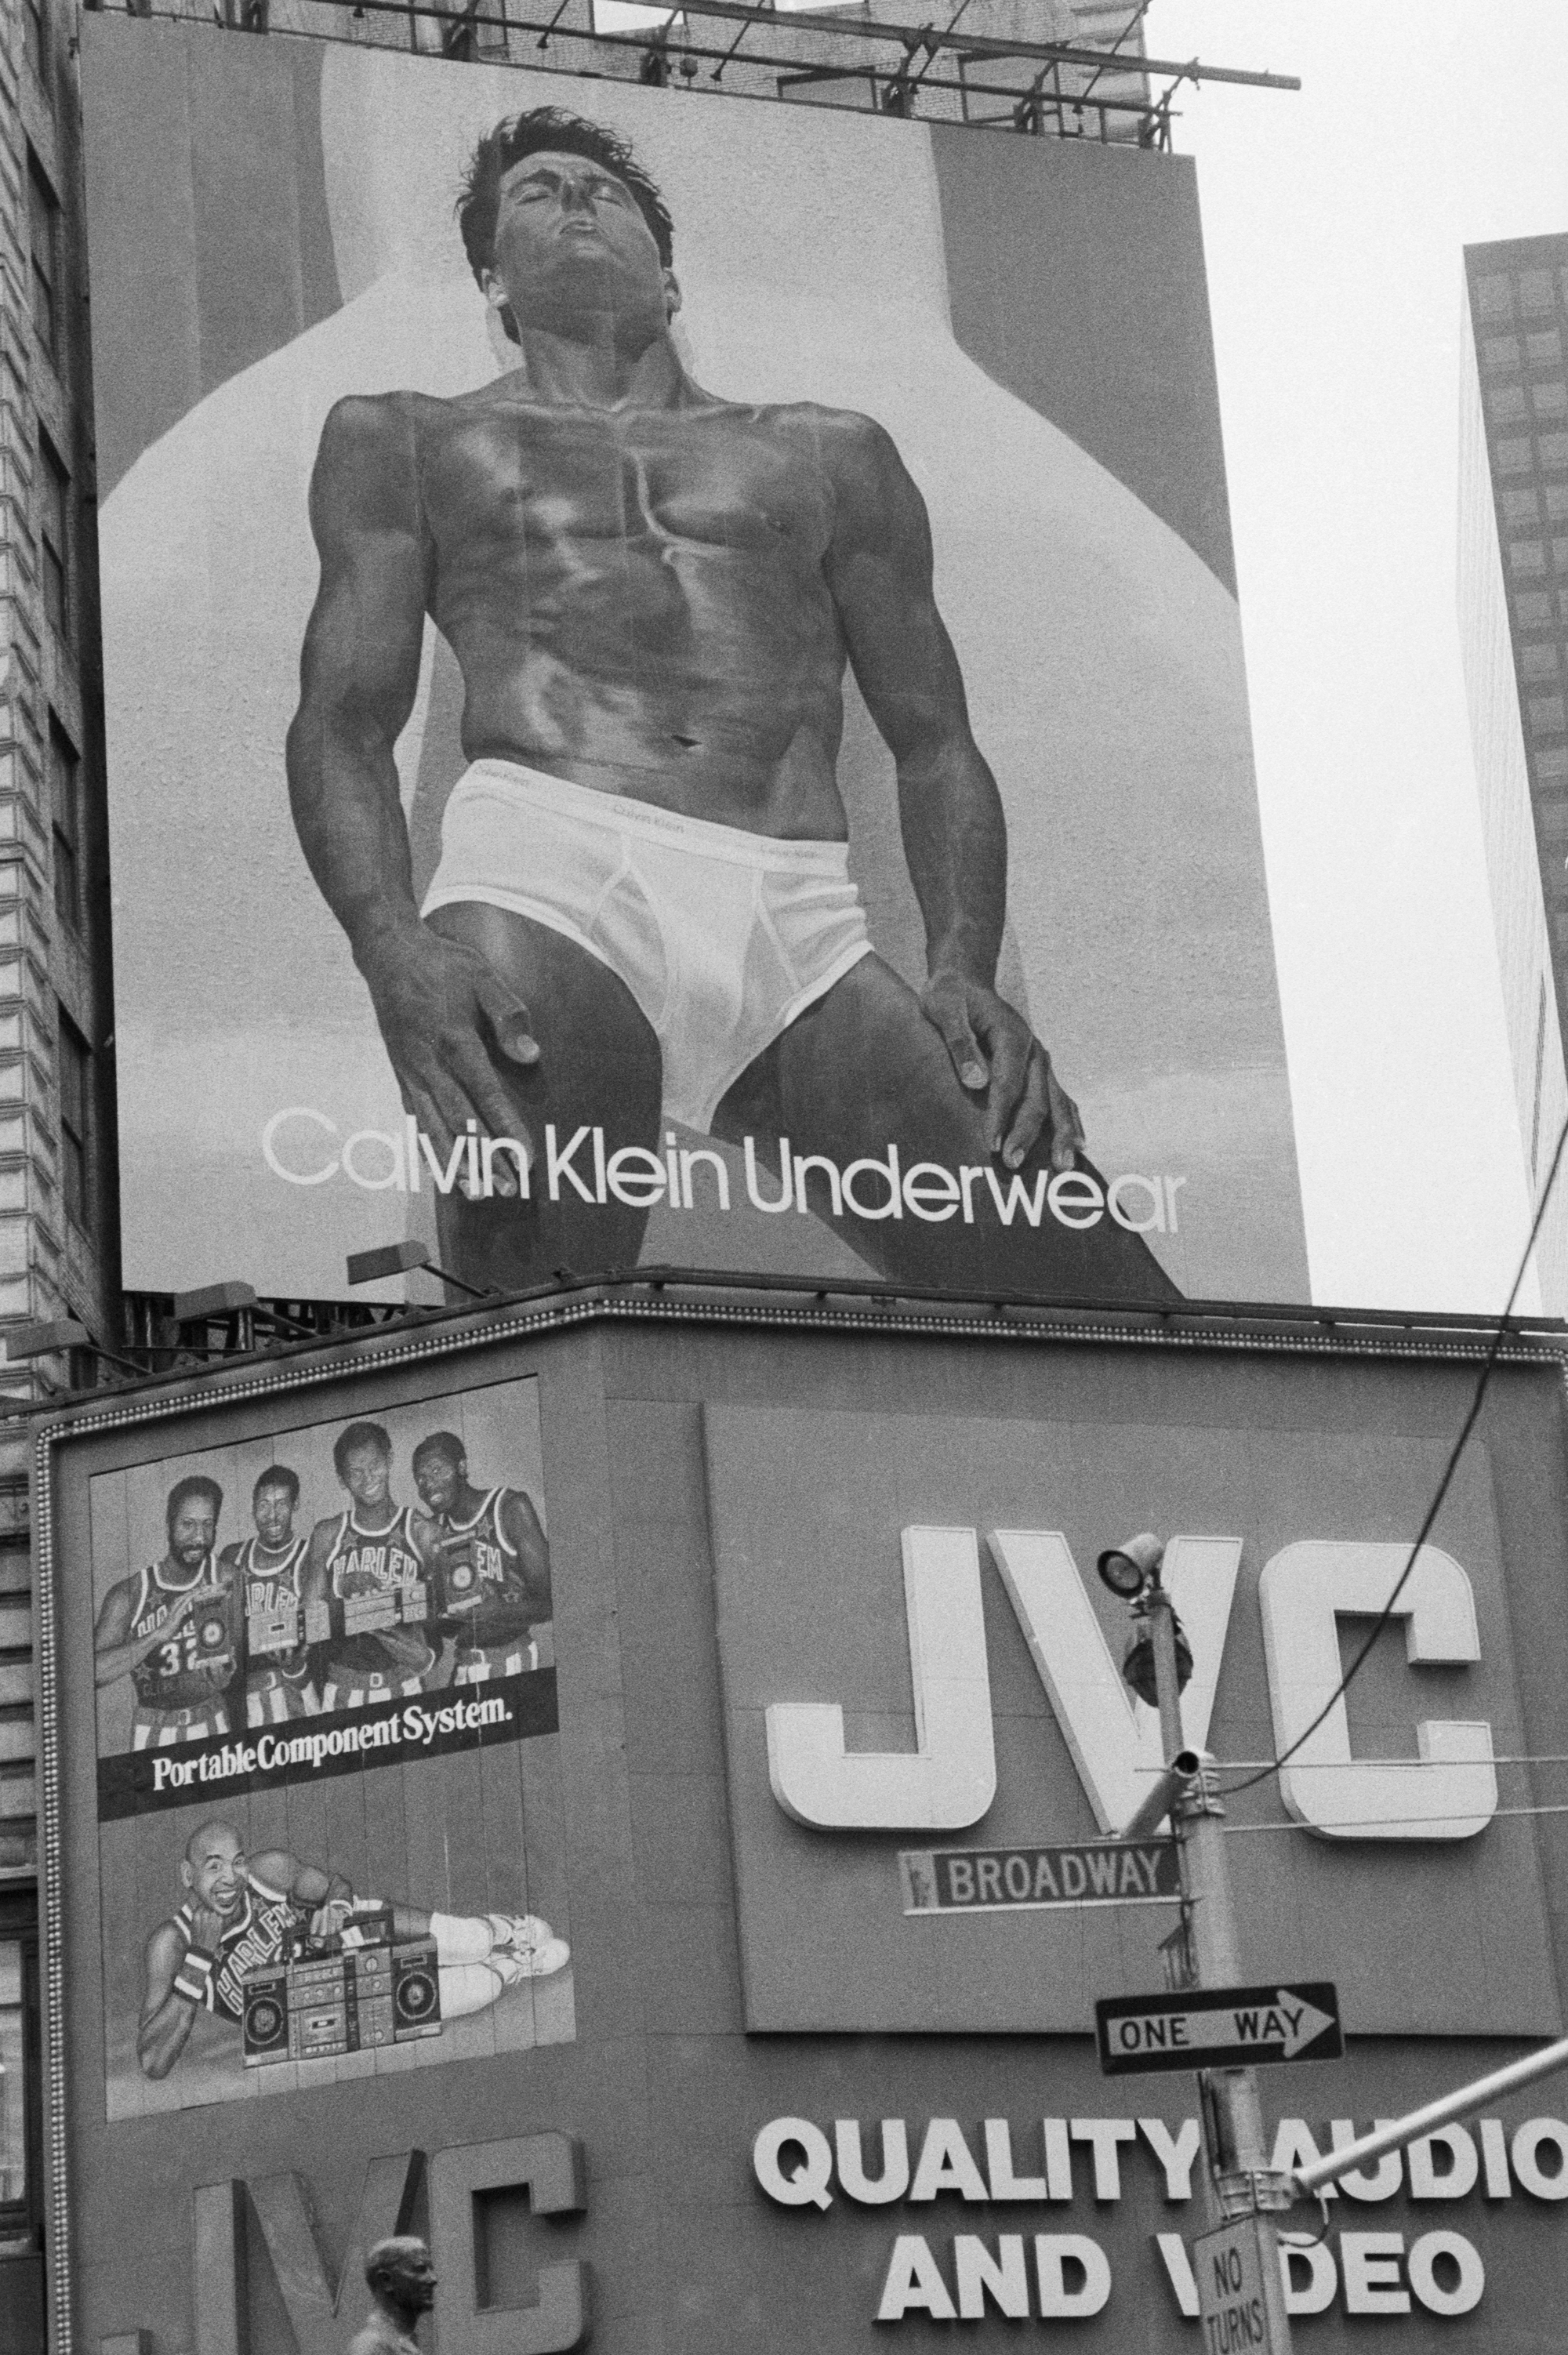 Dressmann's new underwear for perfect men advert is tackling male